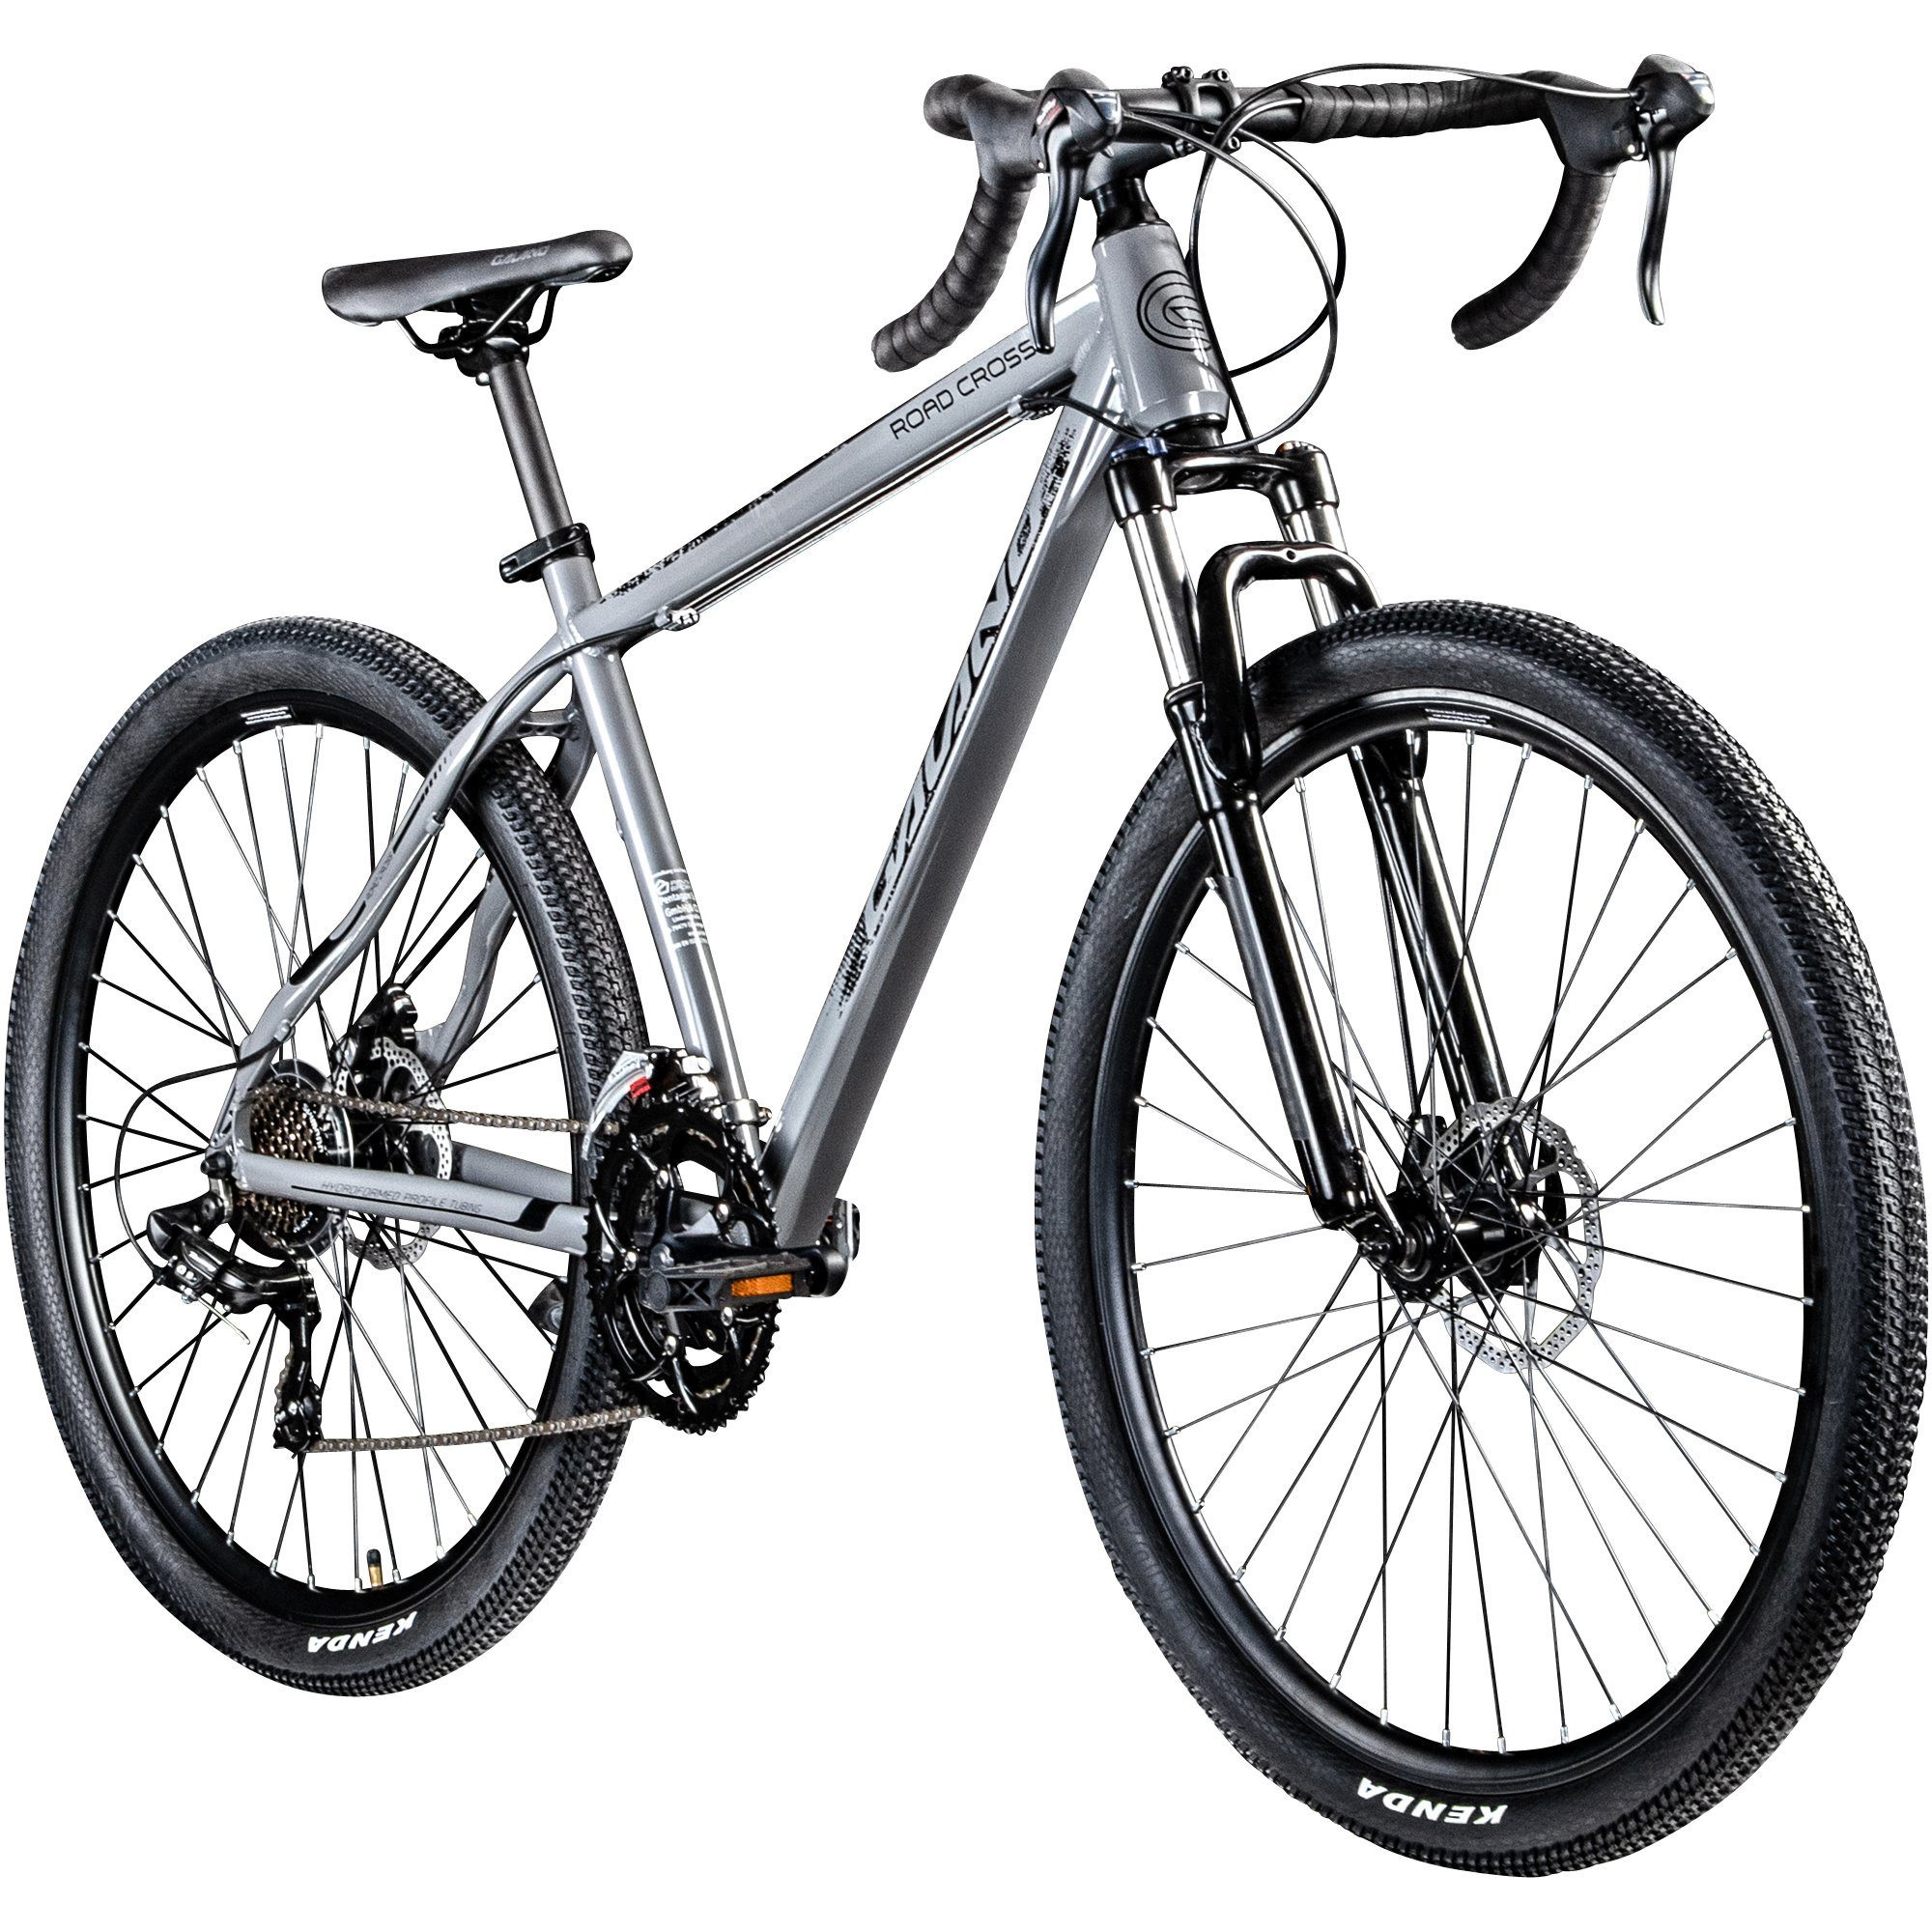 Galano Cyclocross-Rad Road Cross, 14 Gang, Kettenschaltung, Gravel Bike für Damen und Herren 170 - 195 cm Crossrad Fitnessbike grau/schwarz